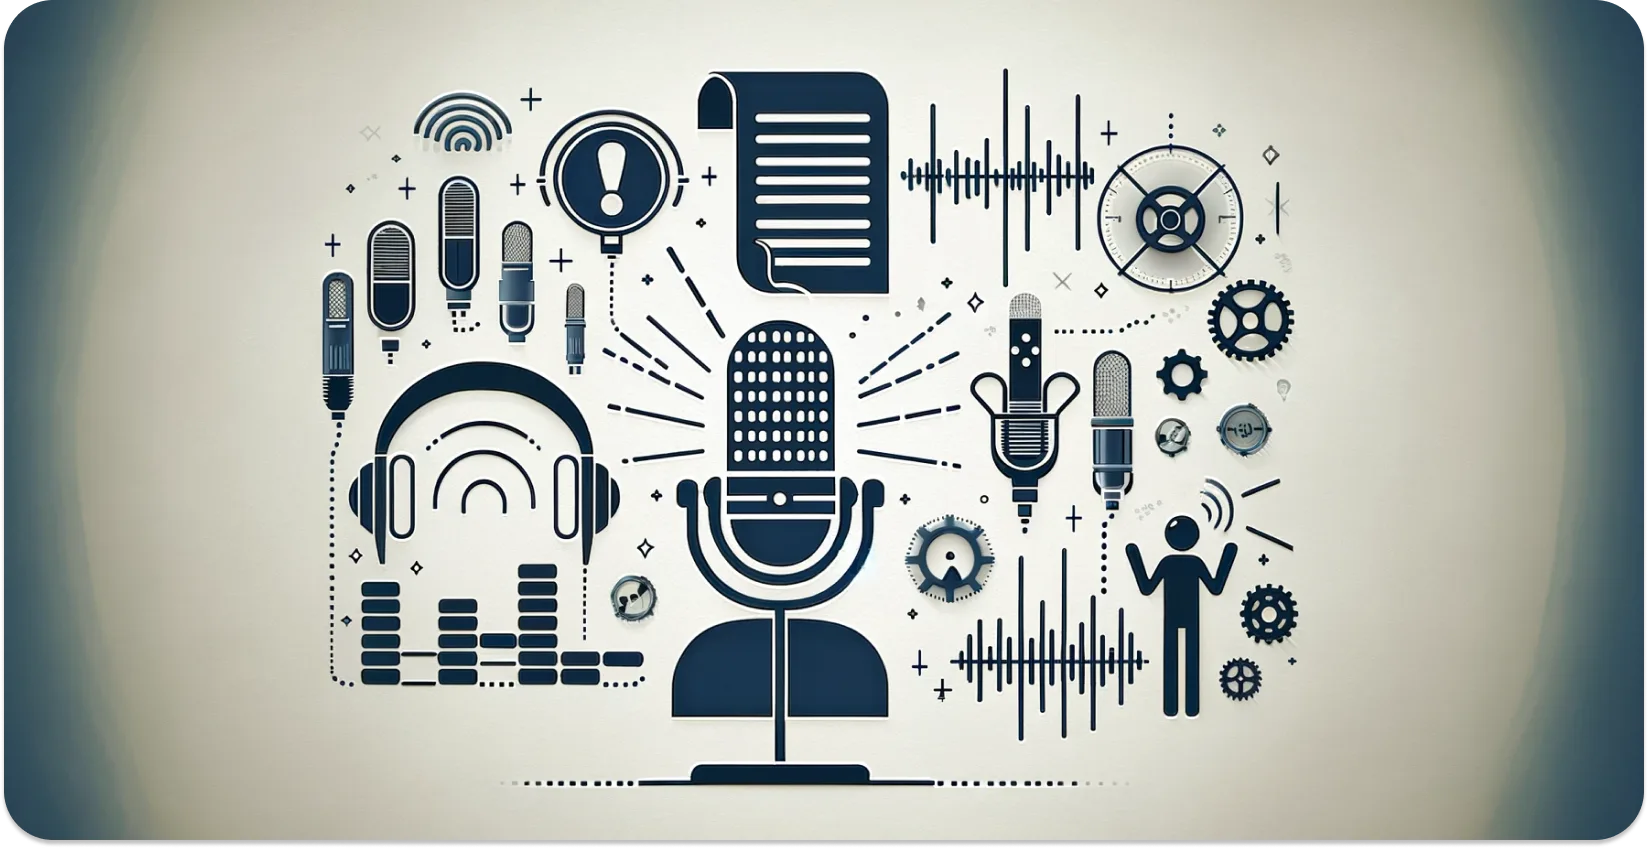 Artistic depiction of microphones, headphones, and sound waves symbolizing audio transcription.